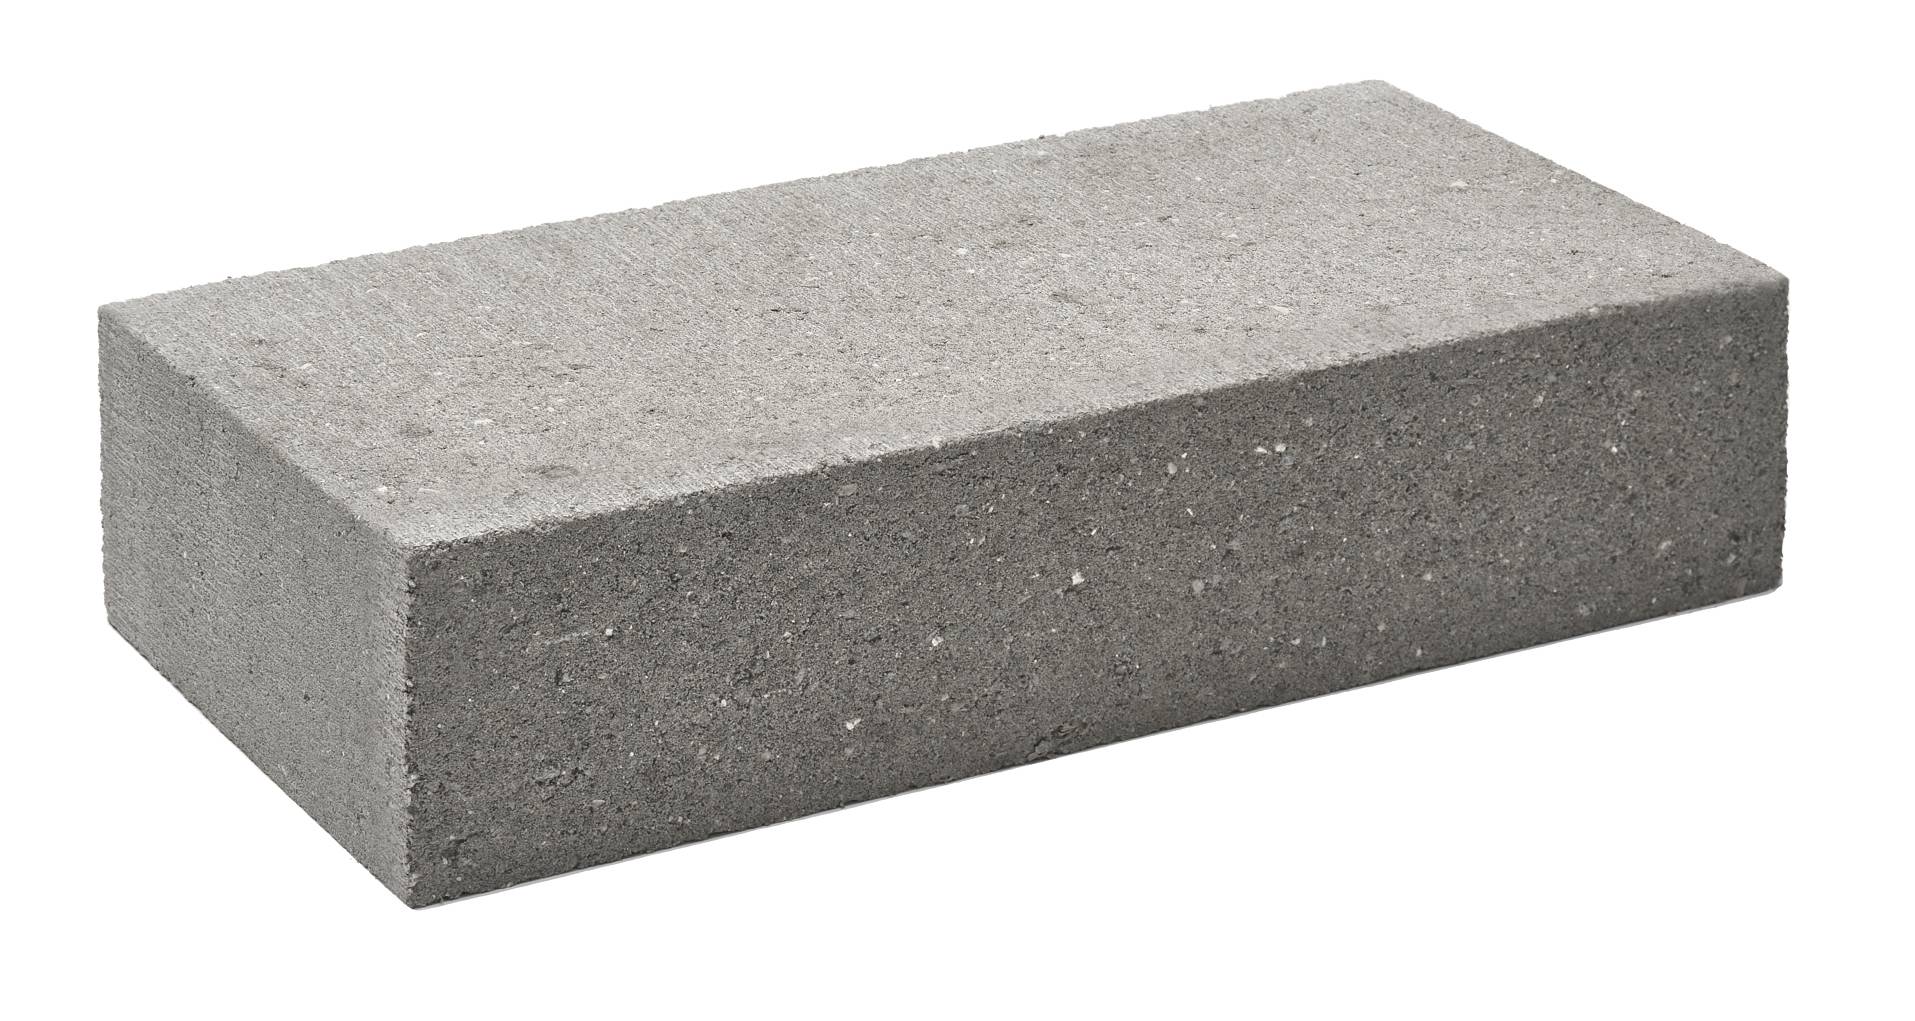 Lignacite 100 mm 7.3 N Concrete Blocks - Fine-Textured Loadbearing Units